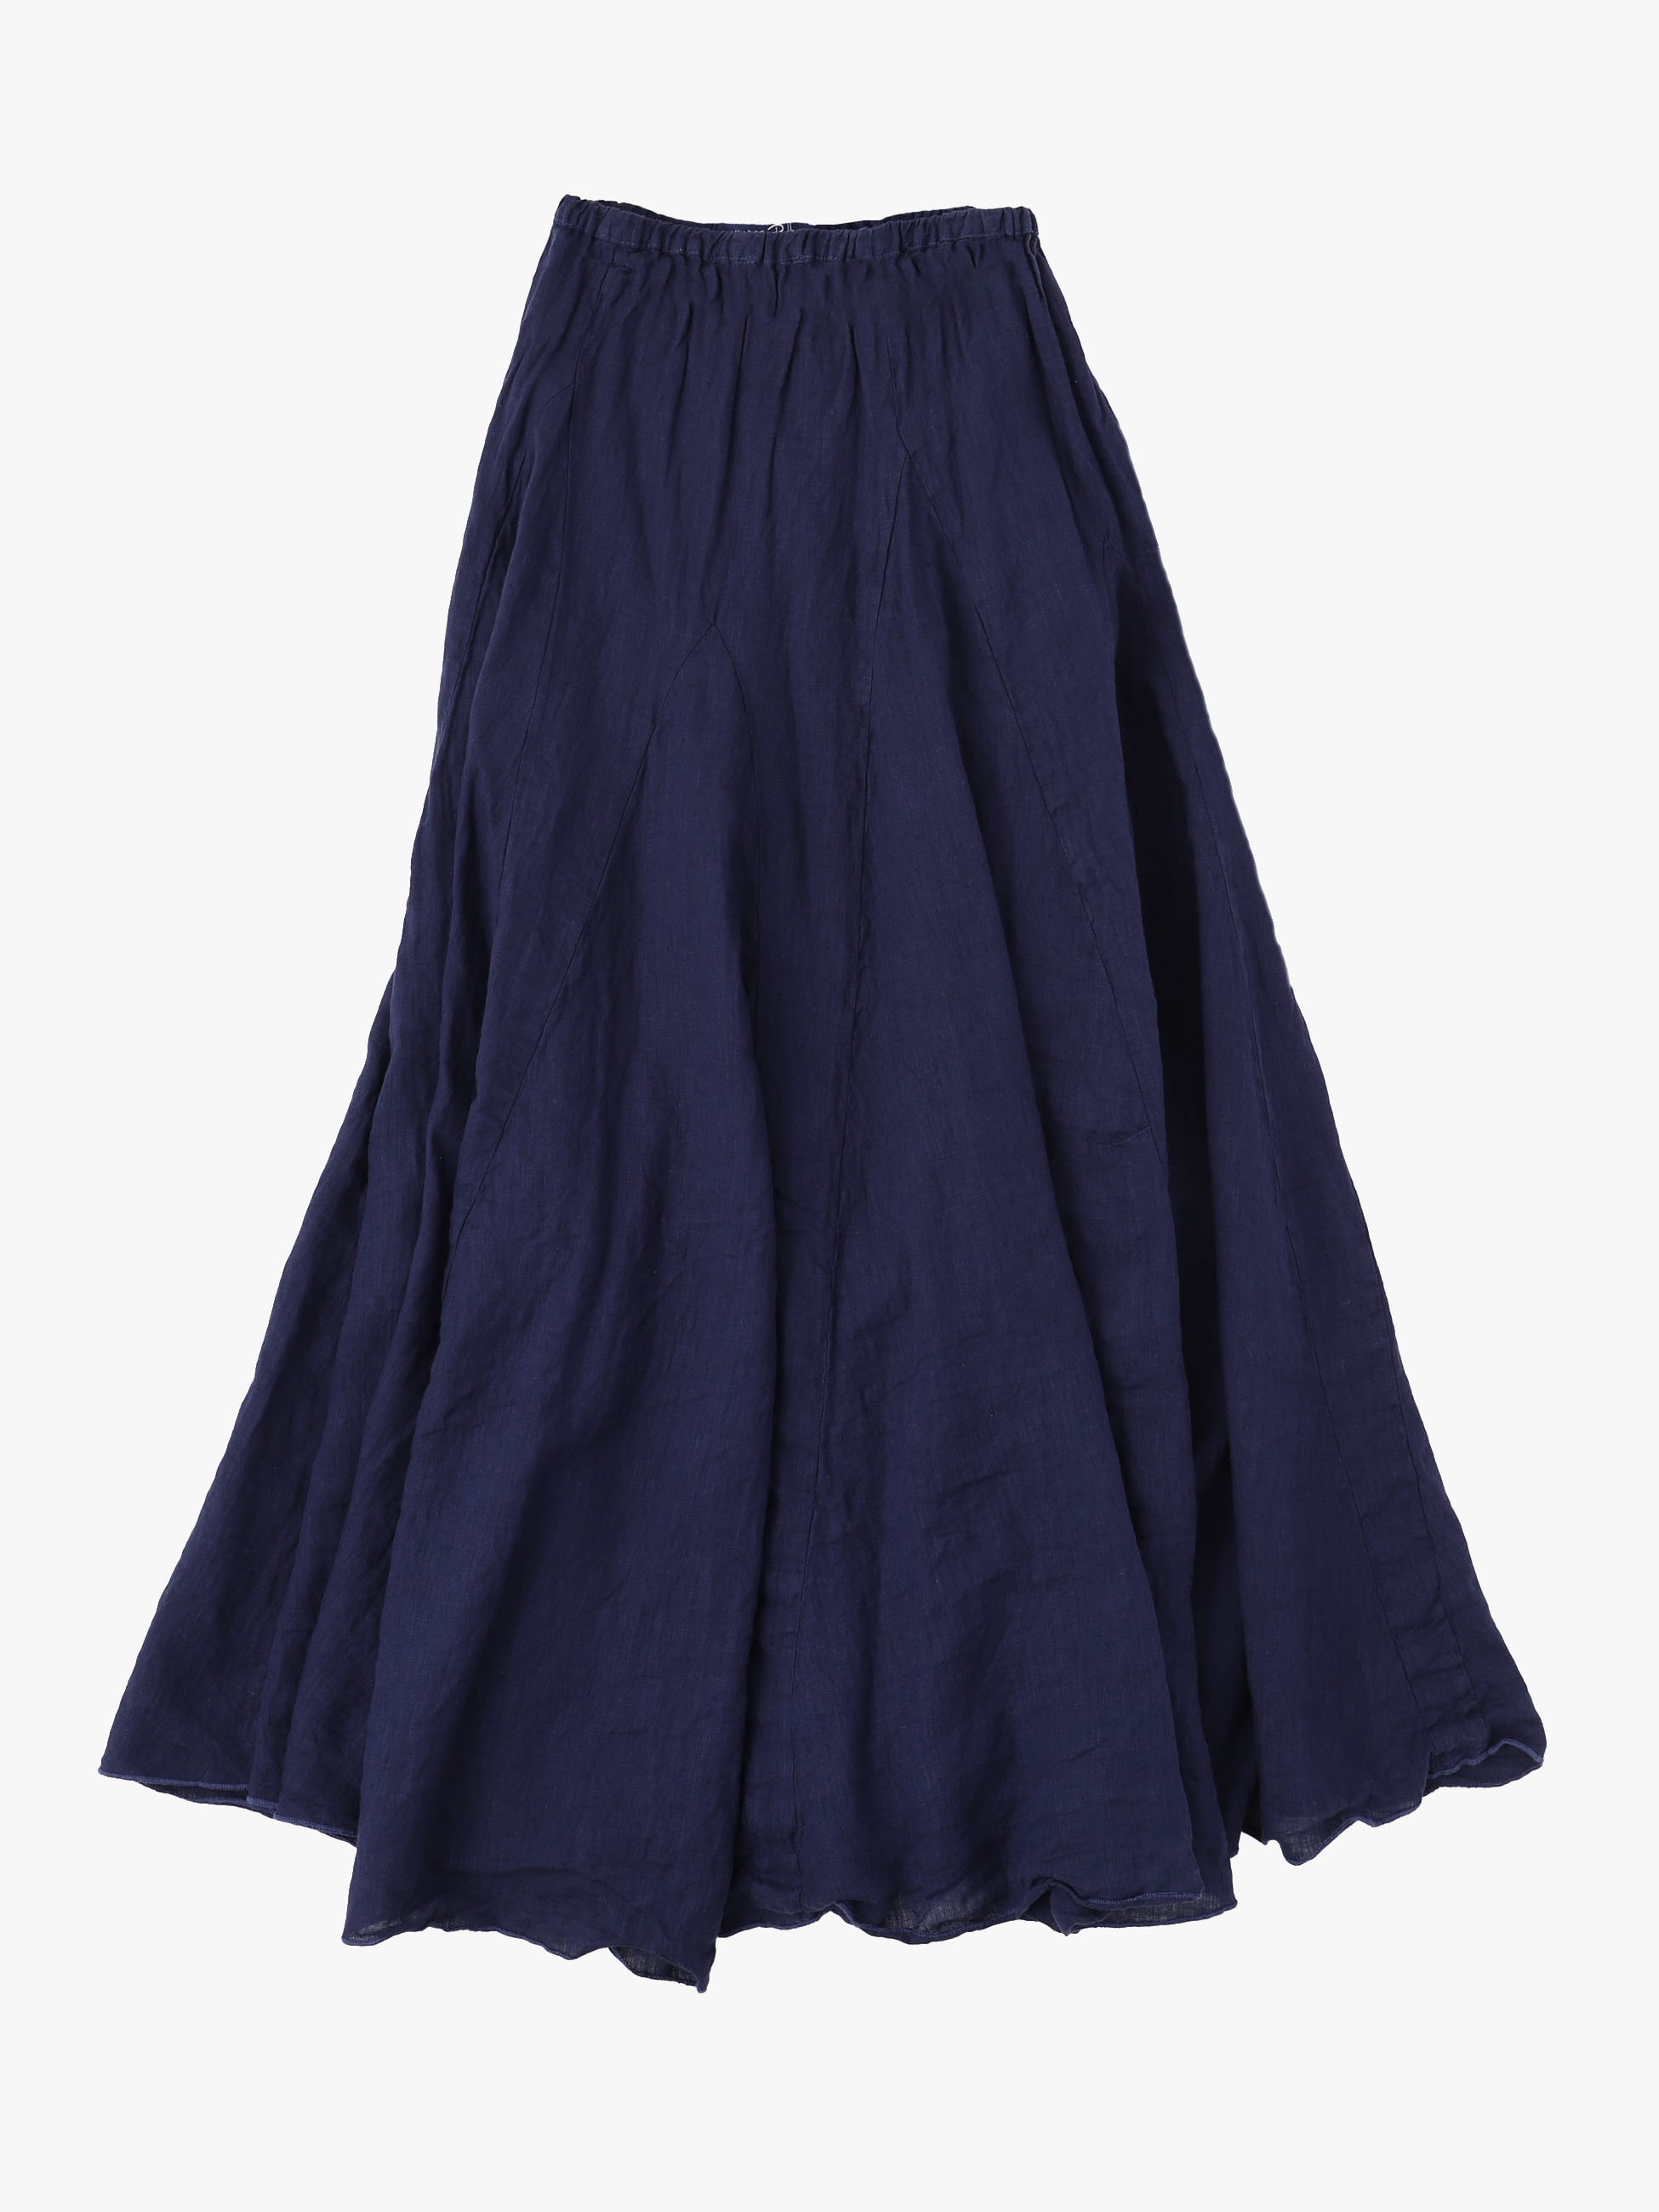 Lily Linen Skirt (Navy)